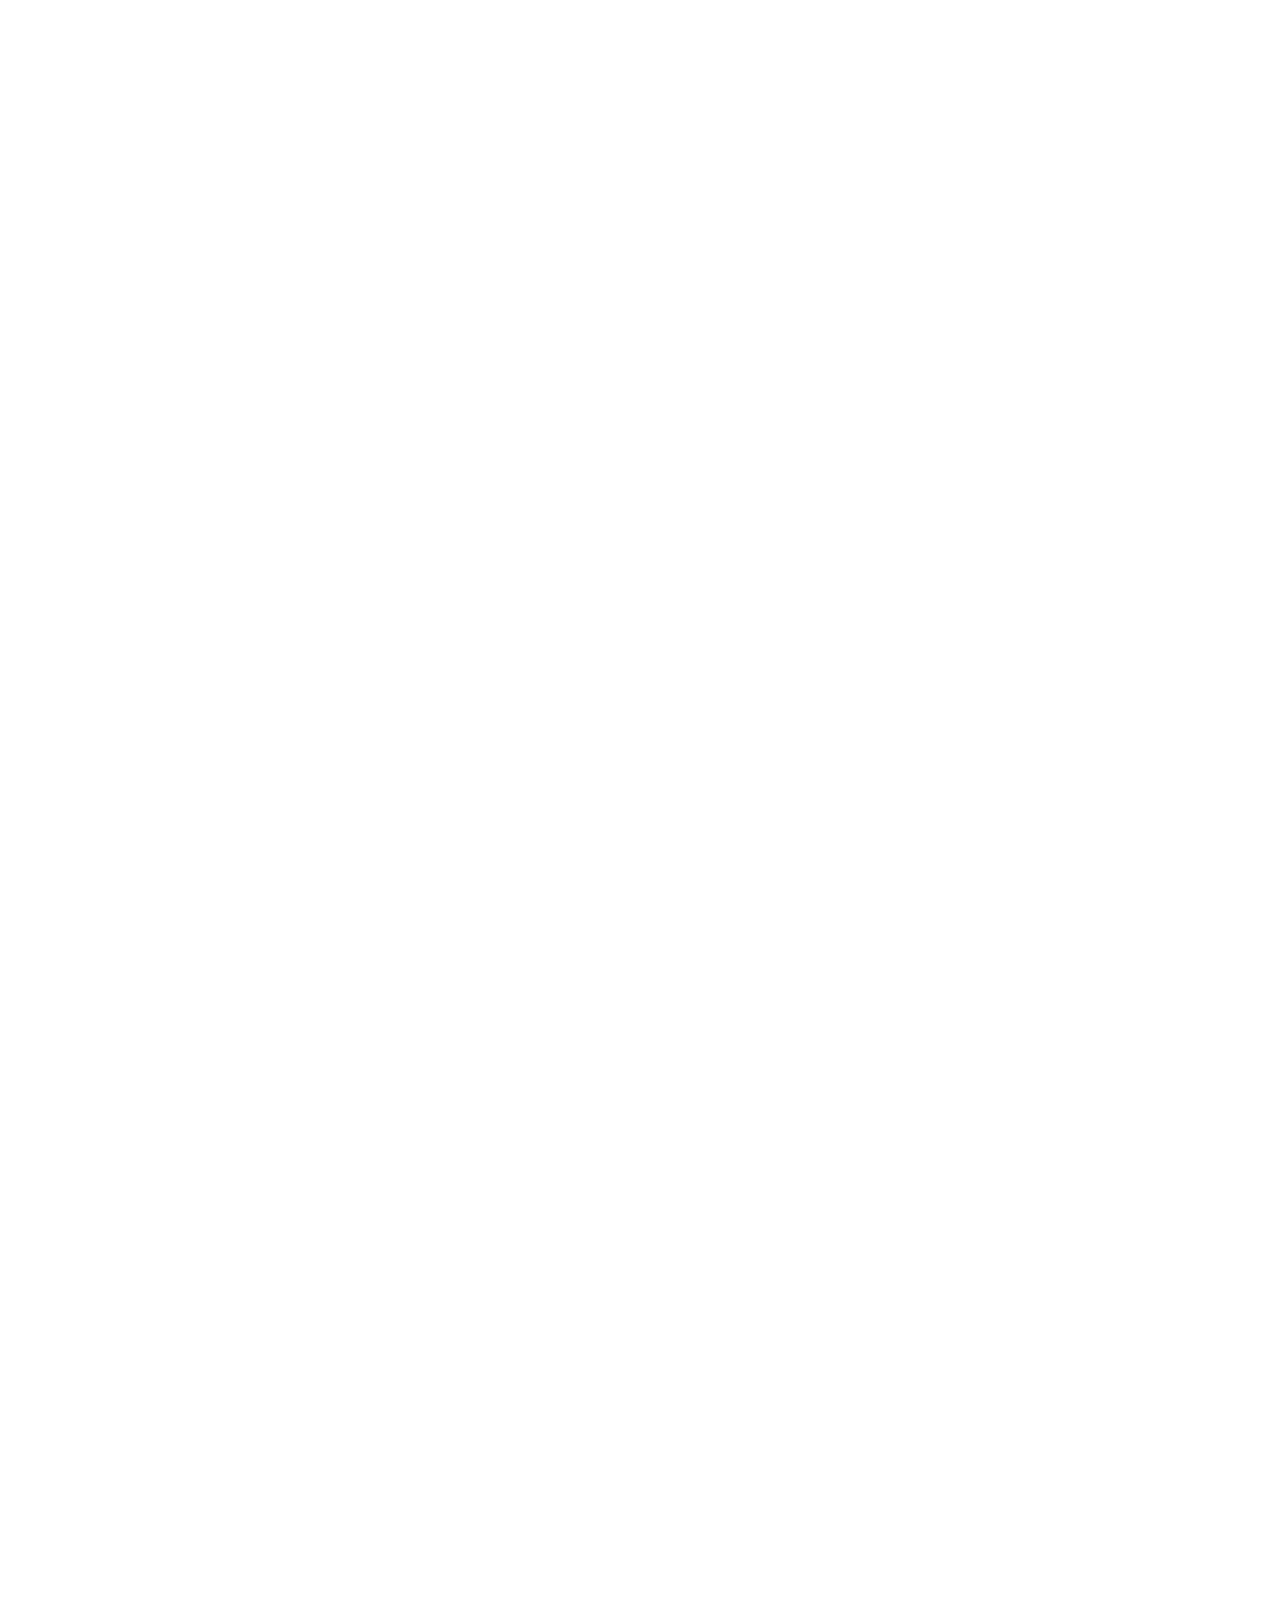 AstraZeneca logo for dark backgrounds (transparent PNG)